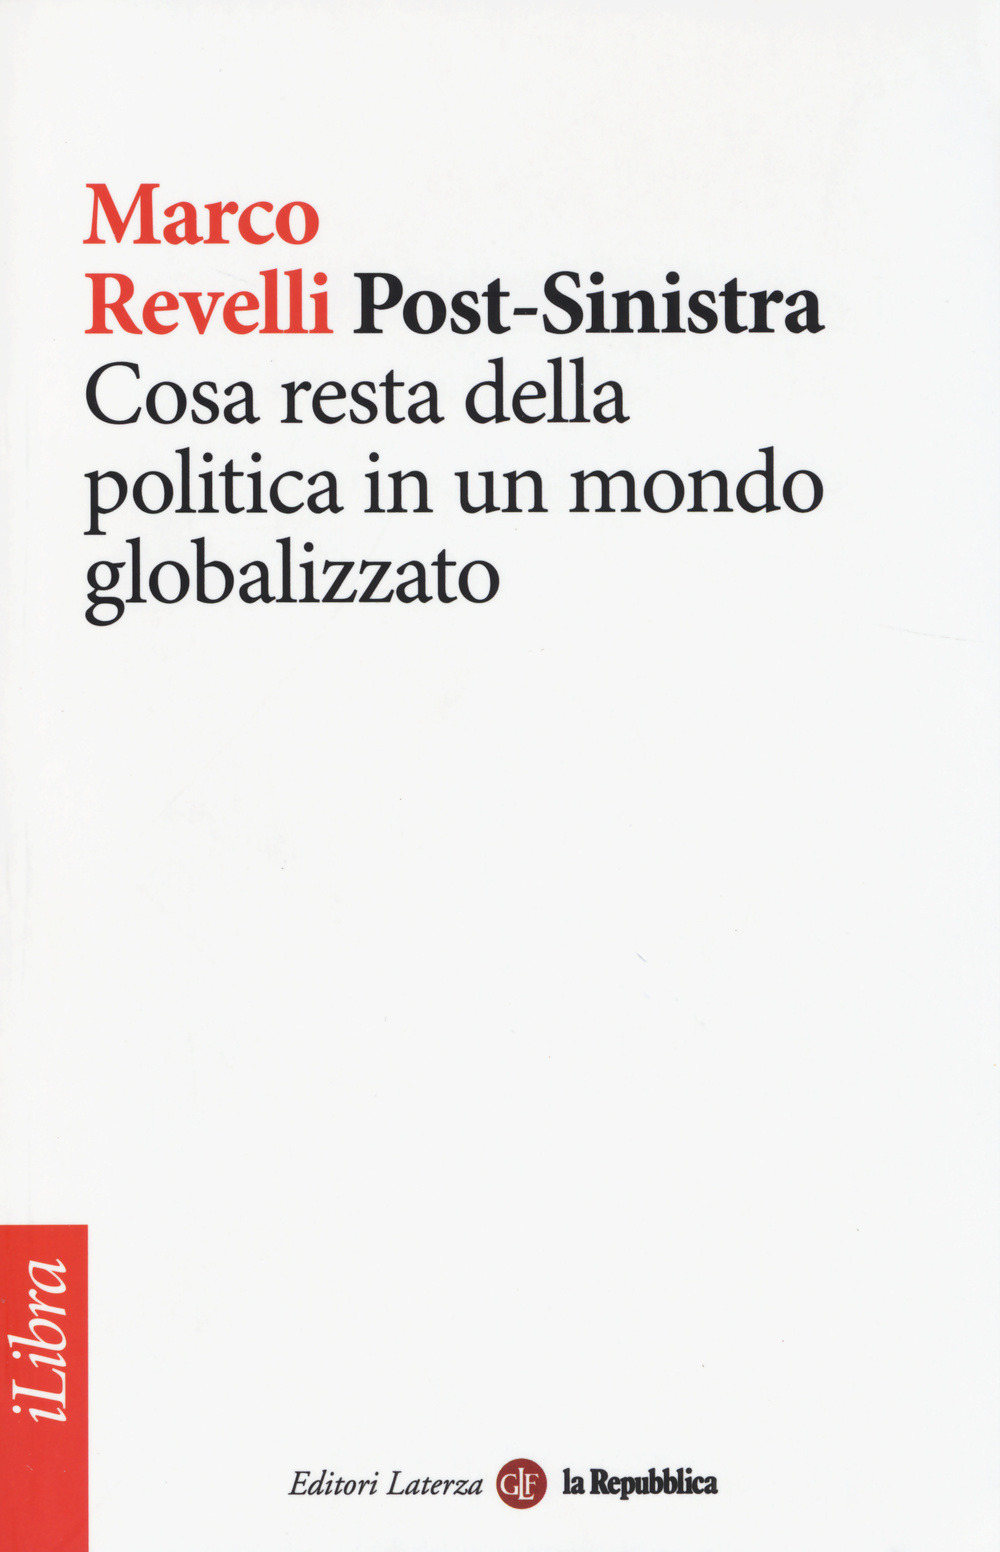 Marco Revelli: Post-Sinistra